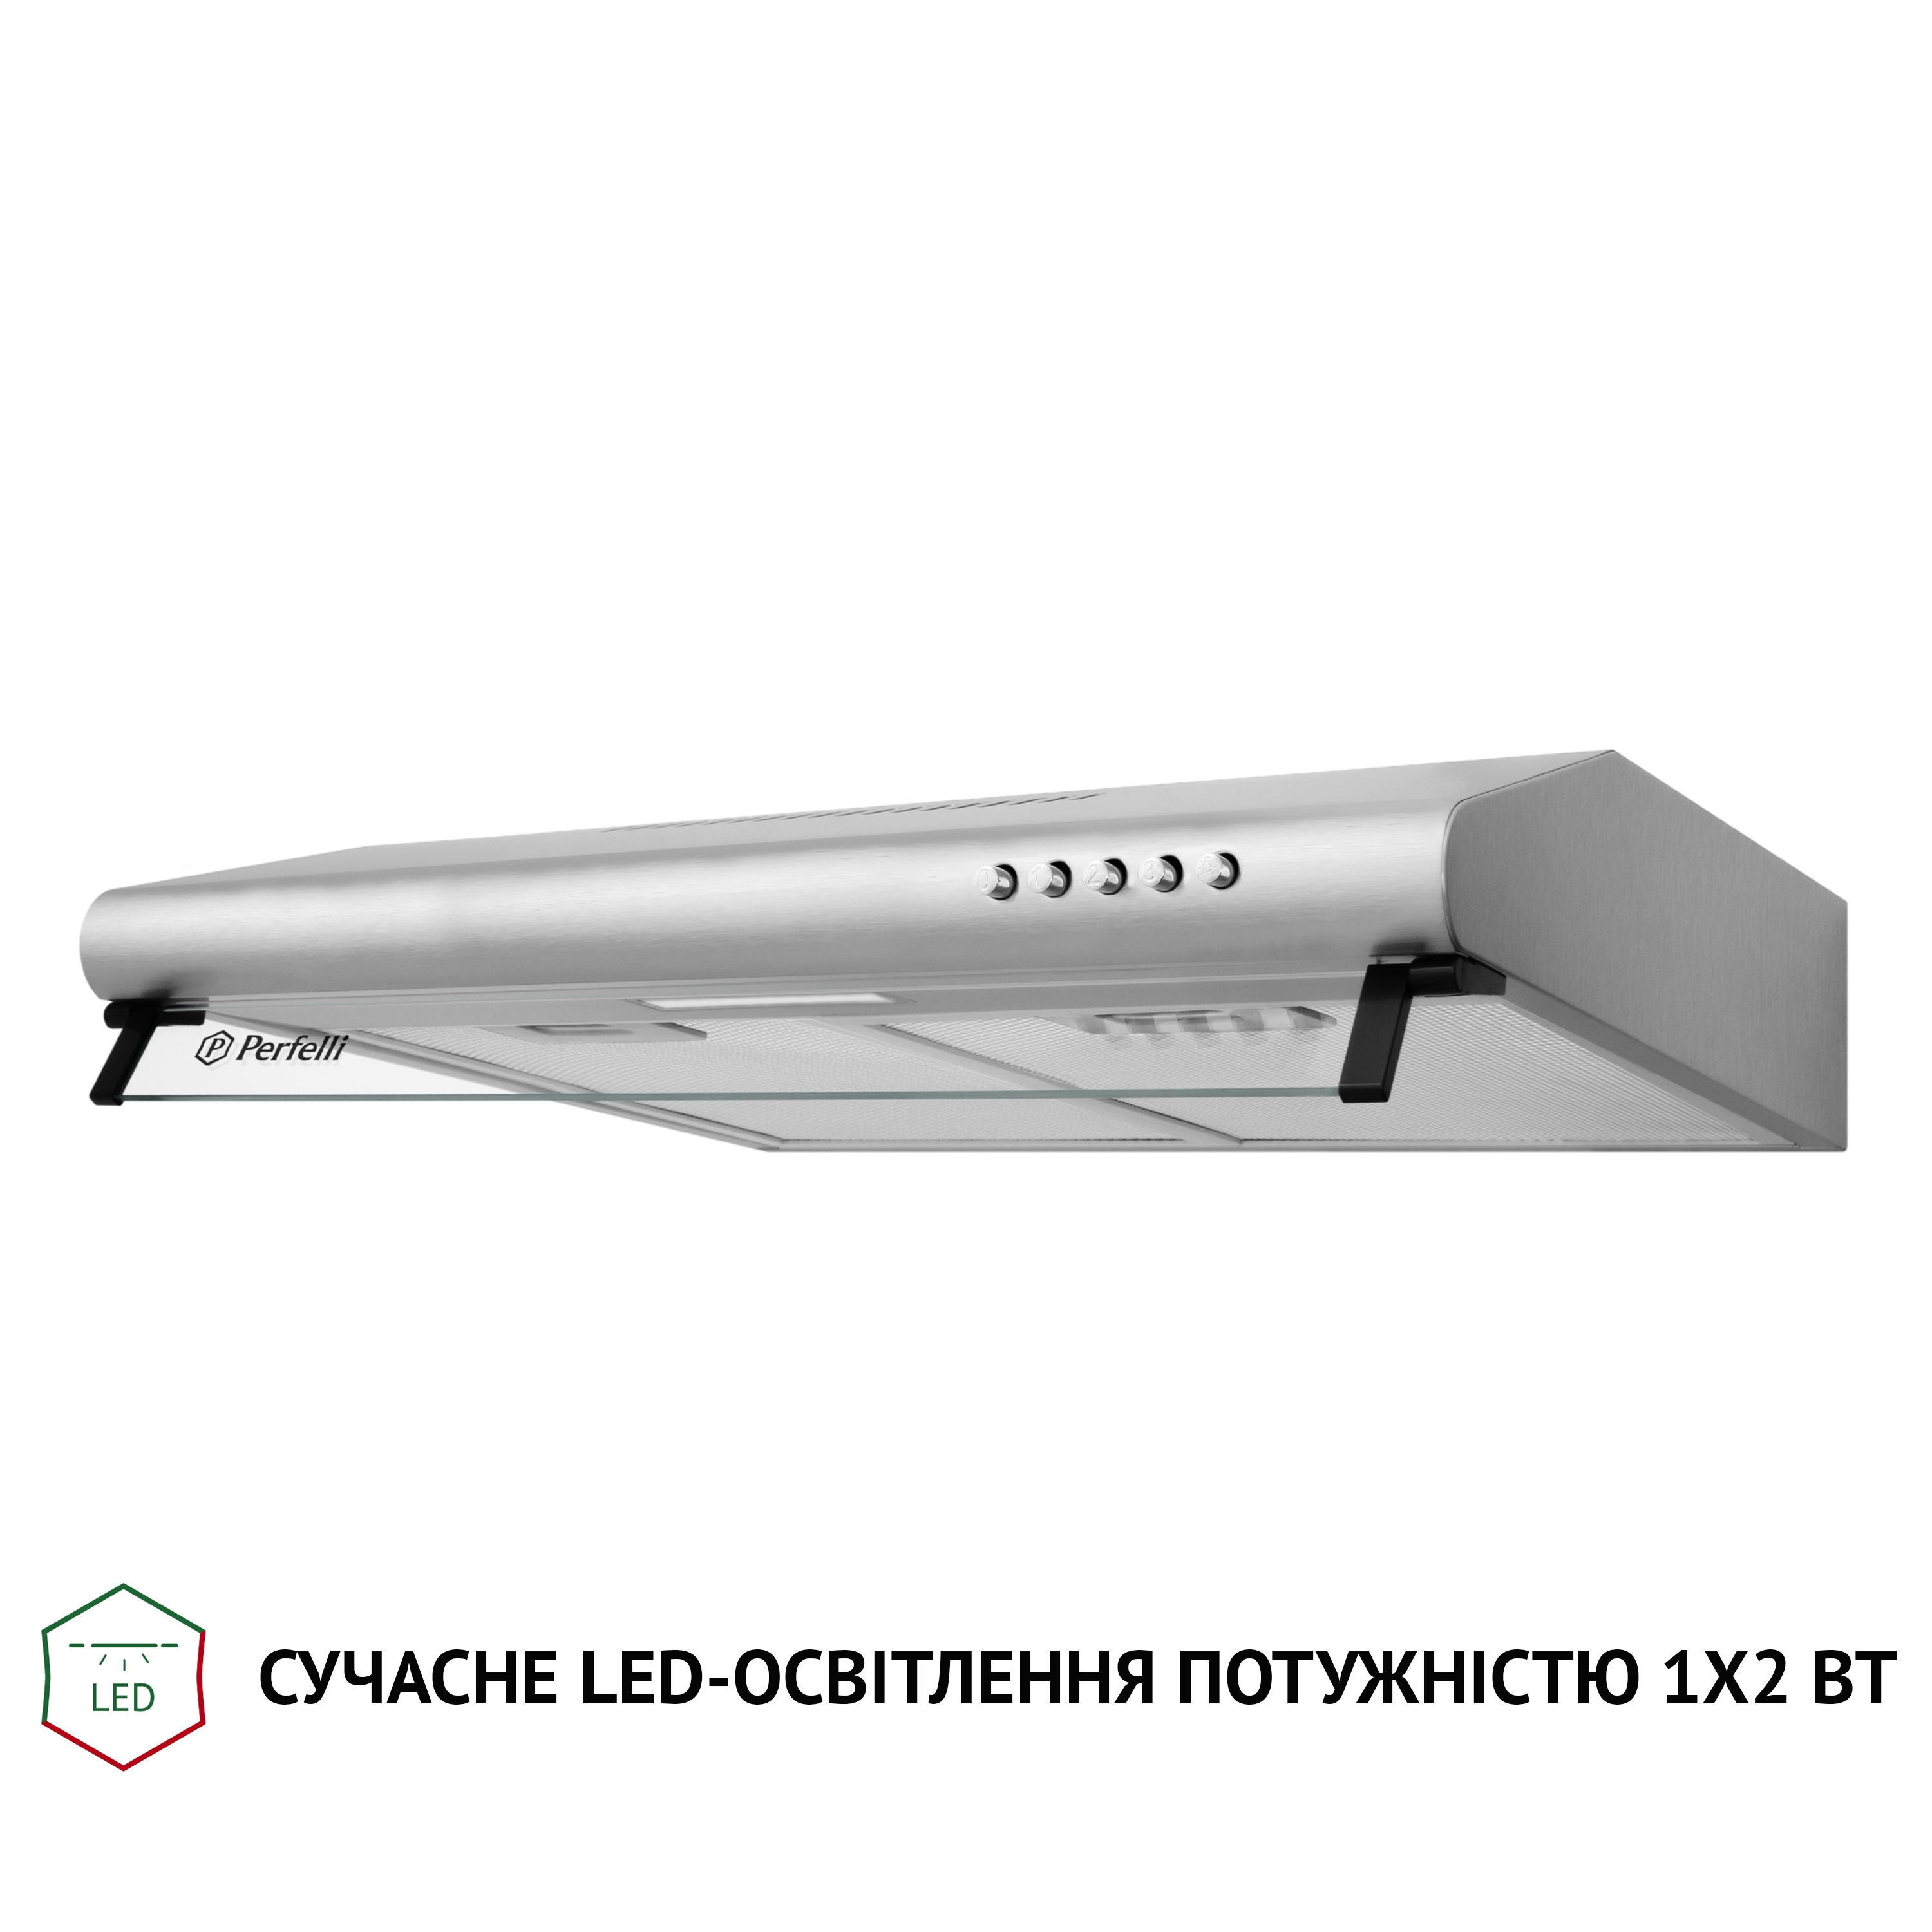 продаём Perfelli PL 5144 I LED в Украине - фото 4